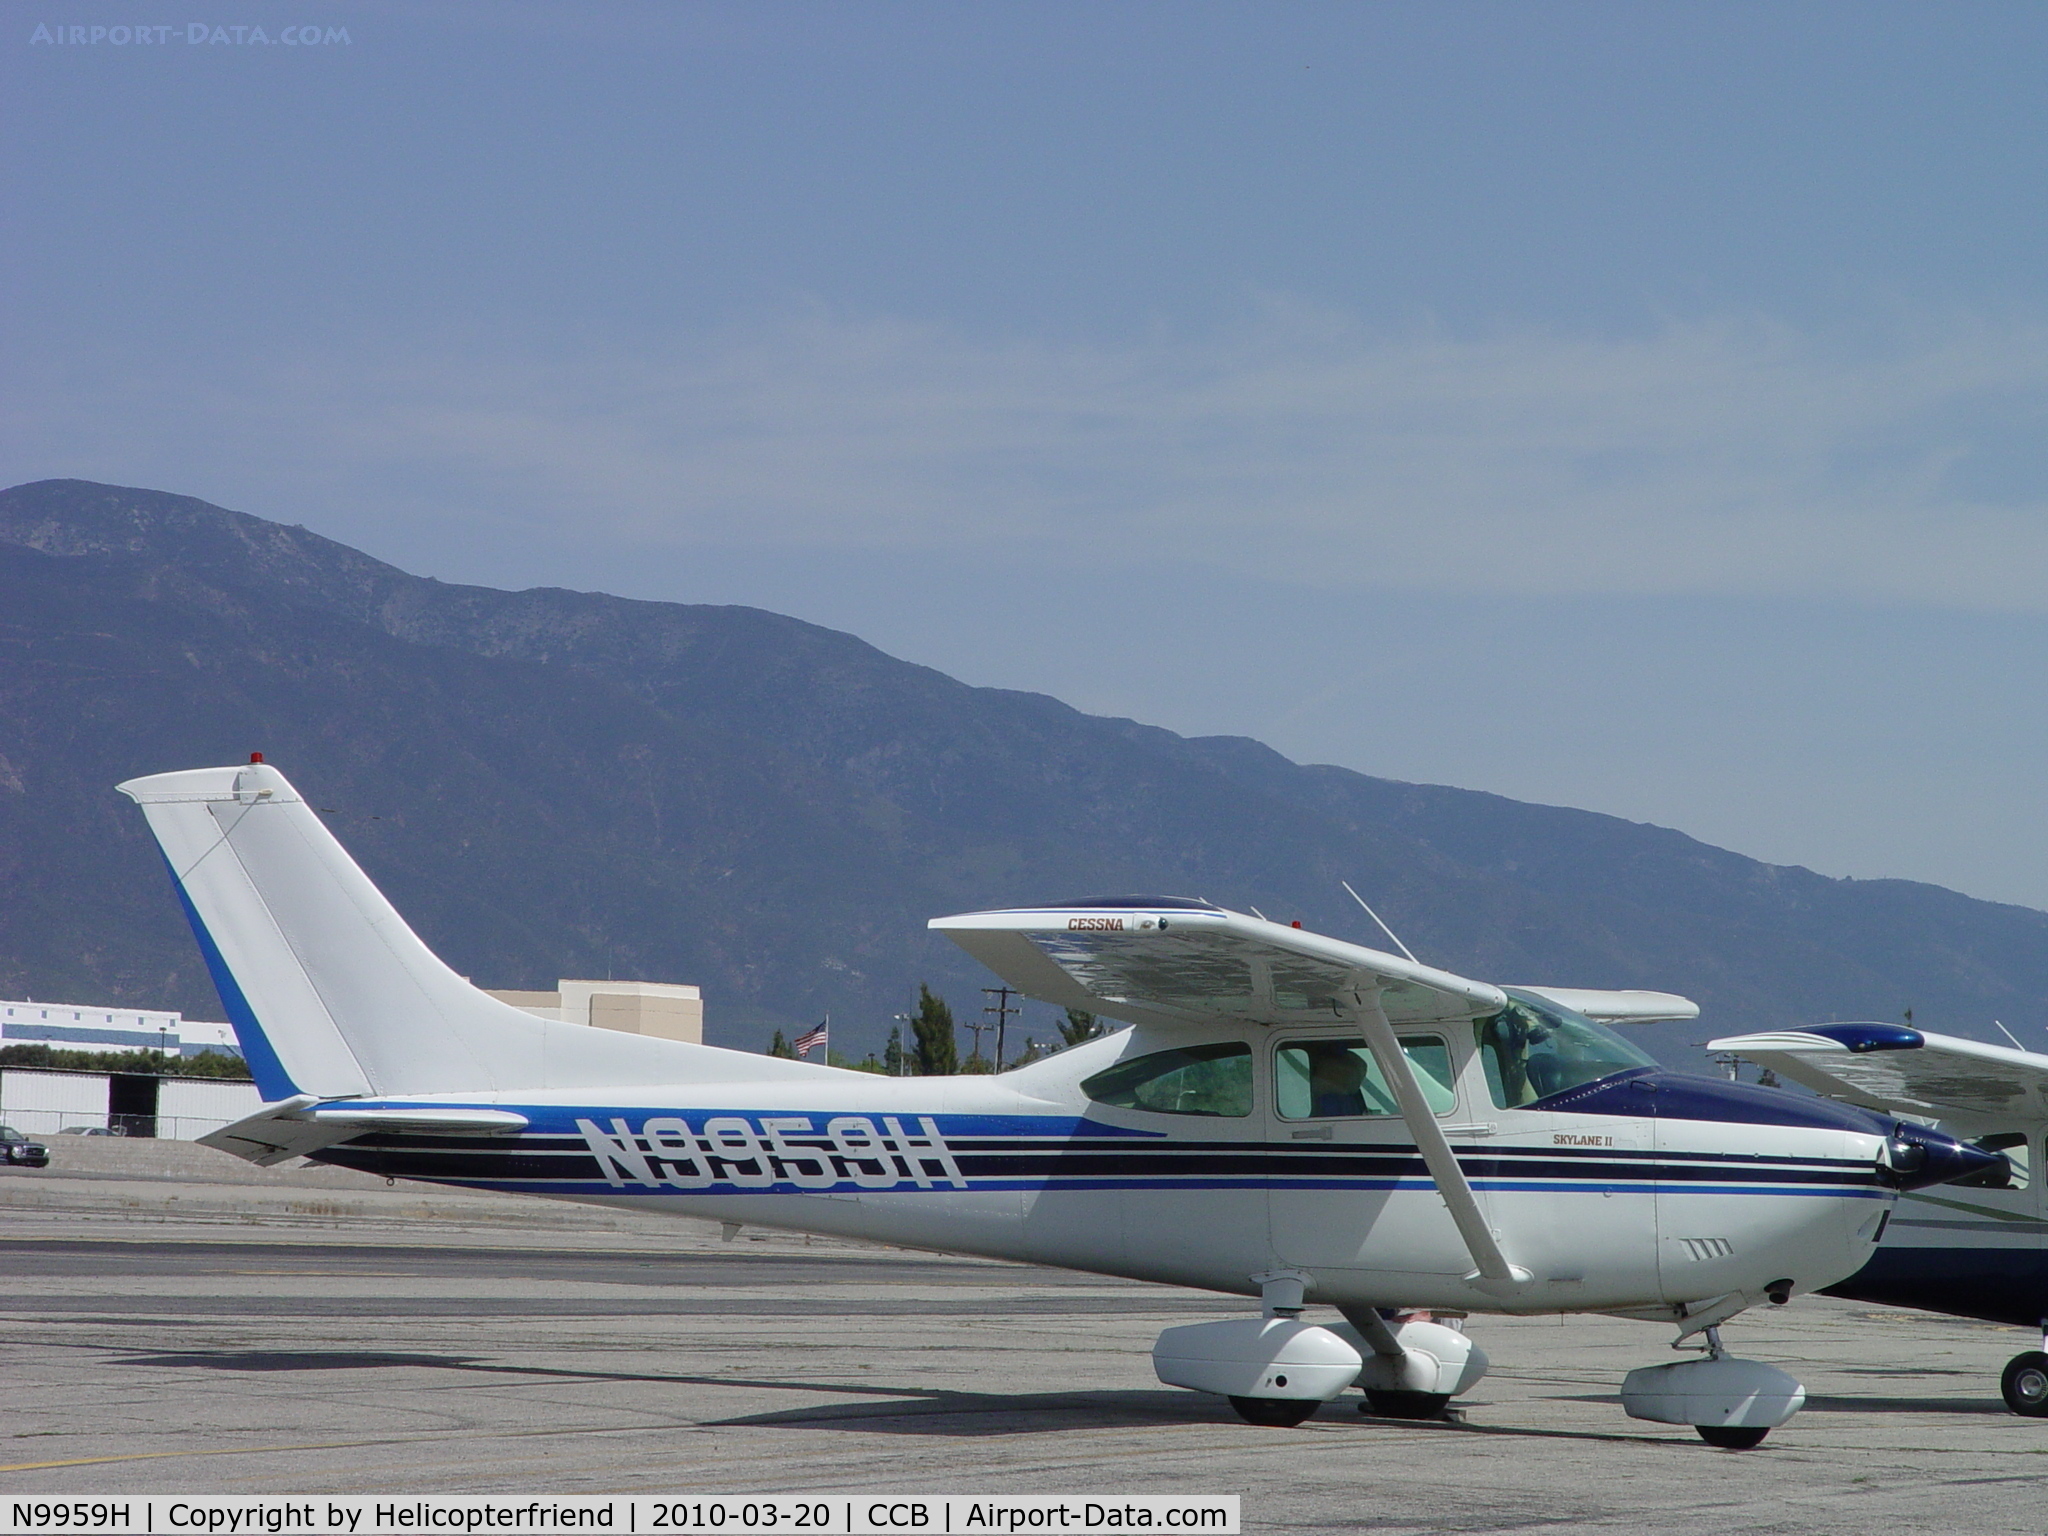 N9959H, 1981 Cessna 182R Skylane C/N 18268144, Parked at Cable